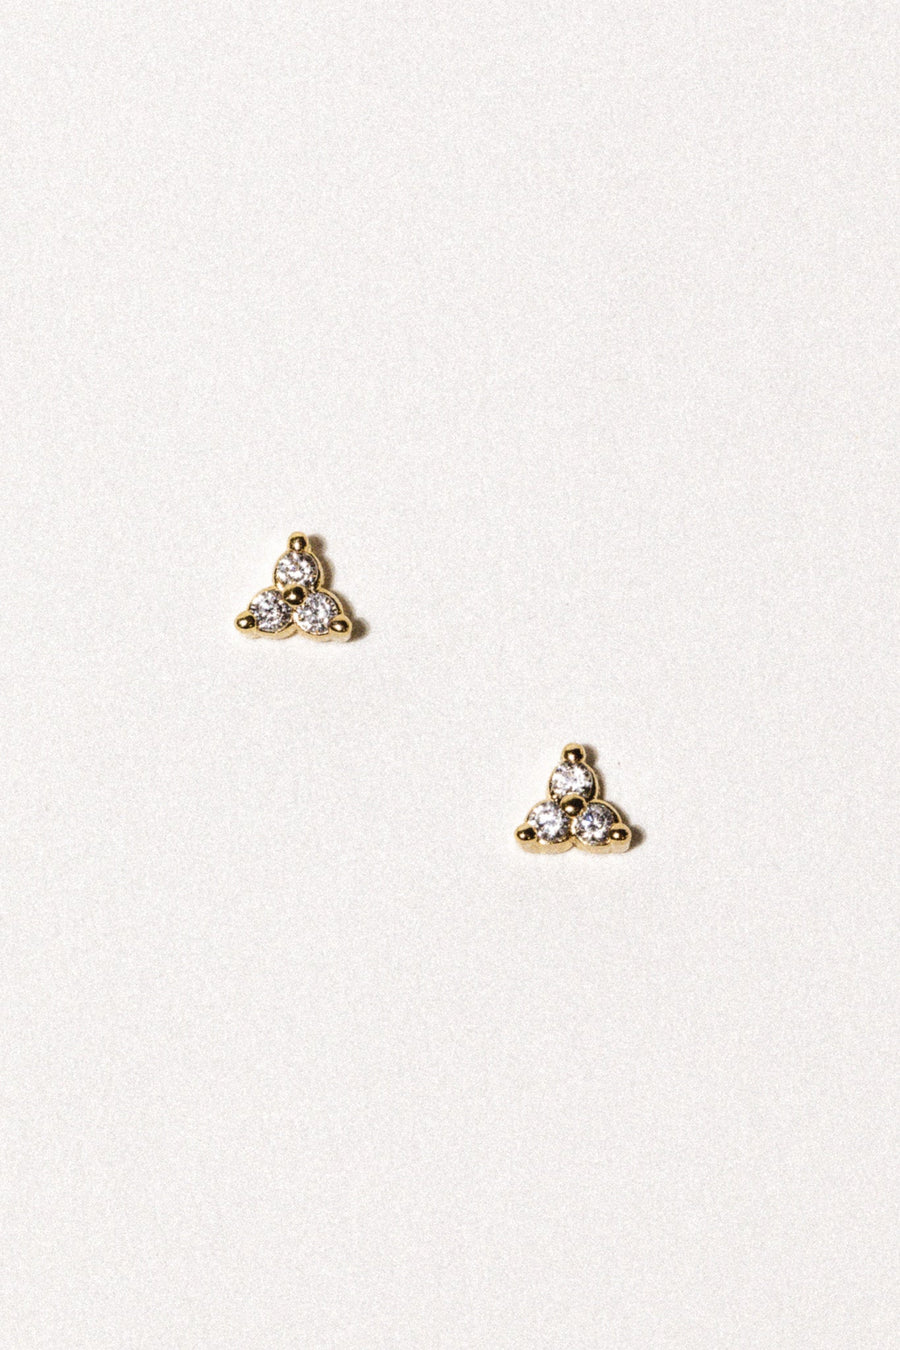 Dona Italia Jewelry Gold / Small Iris CZ Stud Earrings